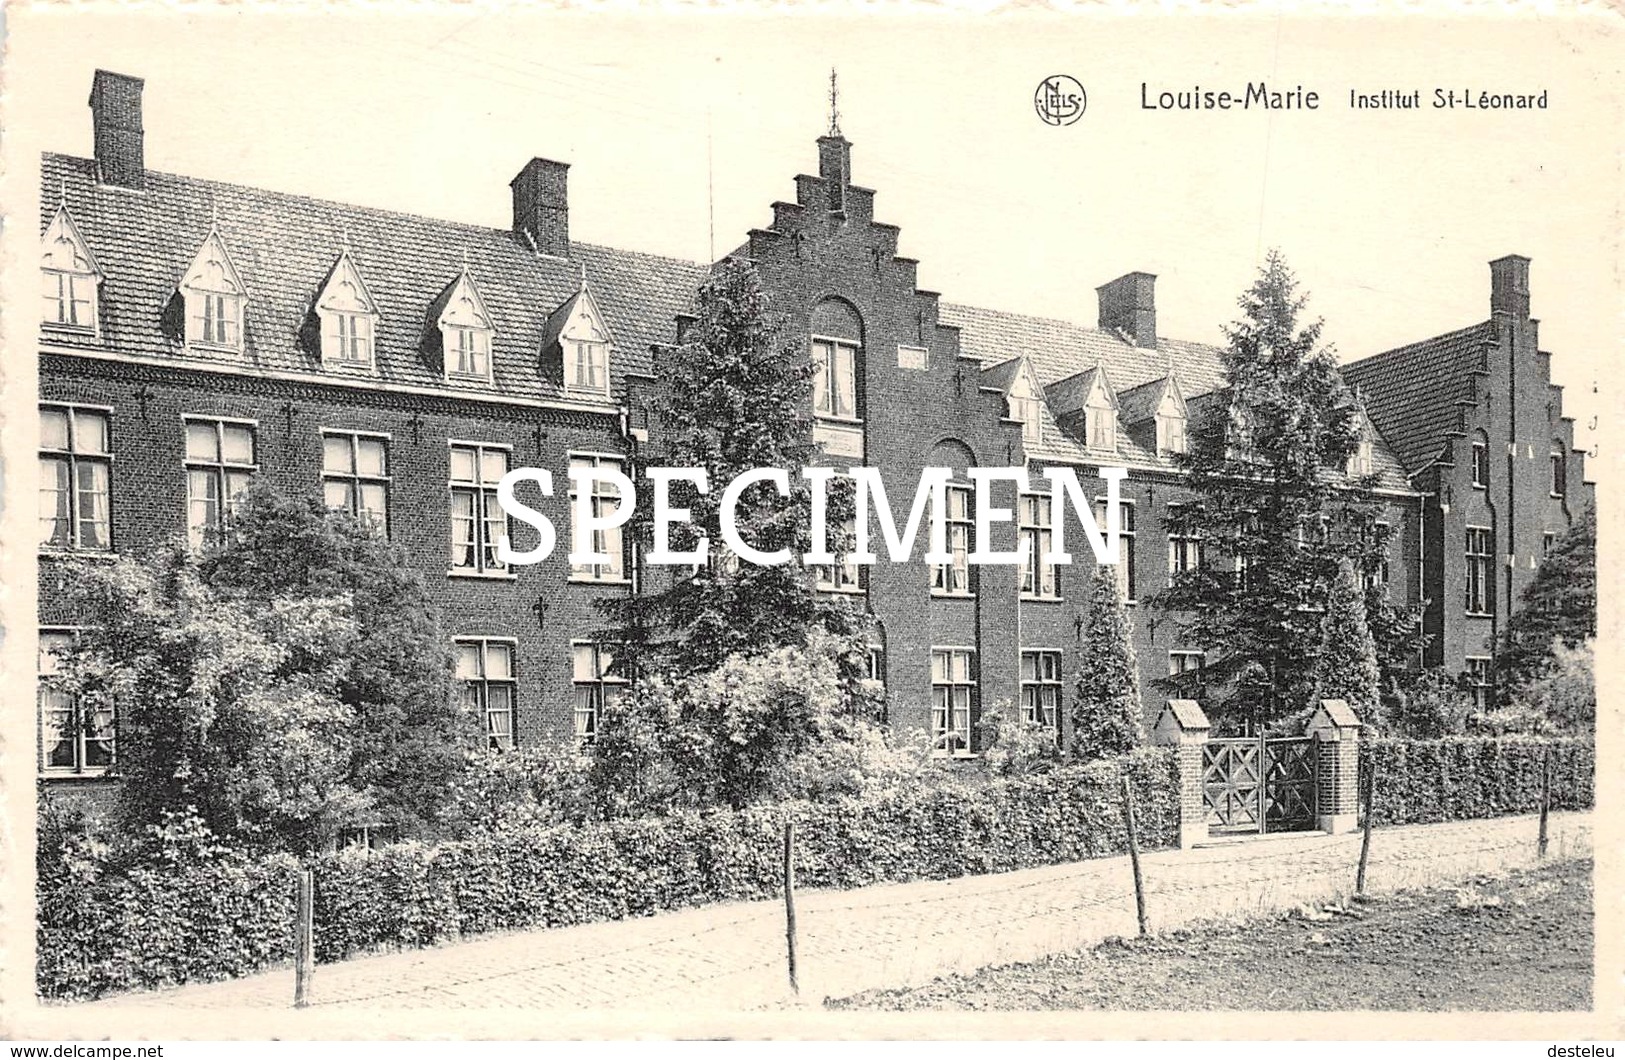 Institut St-Léonard - Louise-Marie - Maarkedal